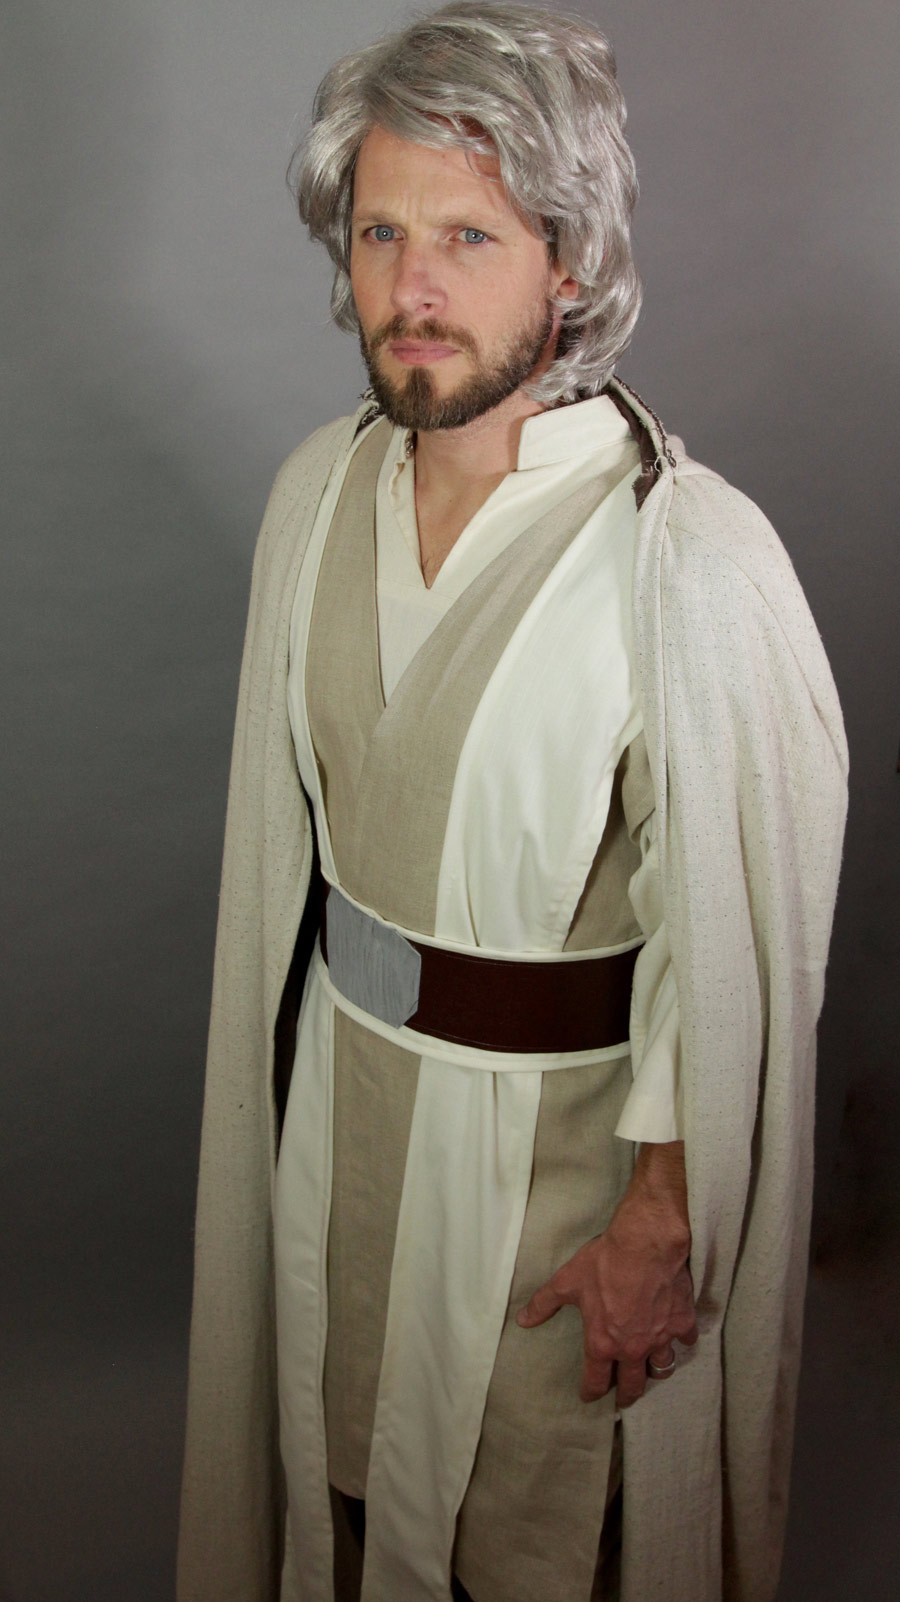 Best ideas about Luke Skywalker Costume DIY
. Save or Pin DIY Adult Star Wars Halloween Costumes Luke Skywalker and Now.